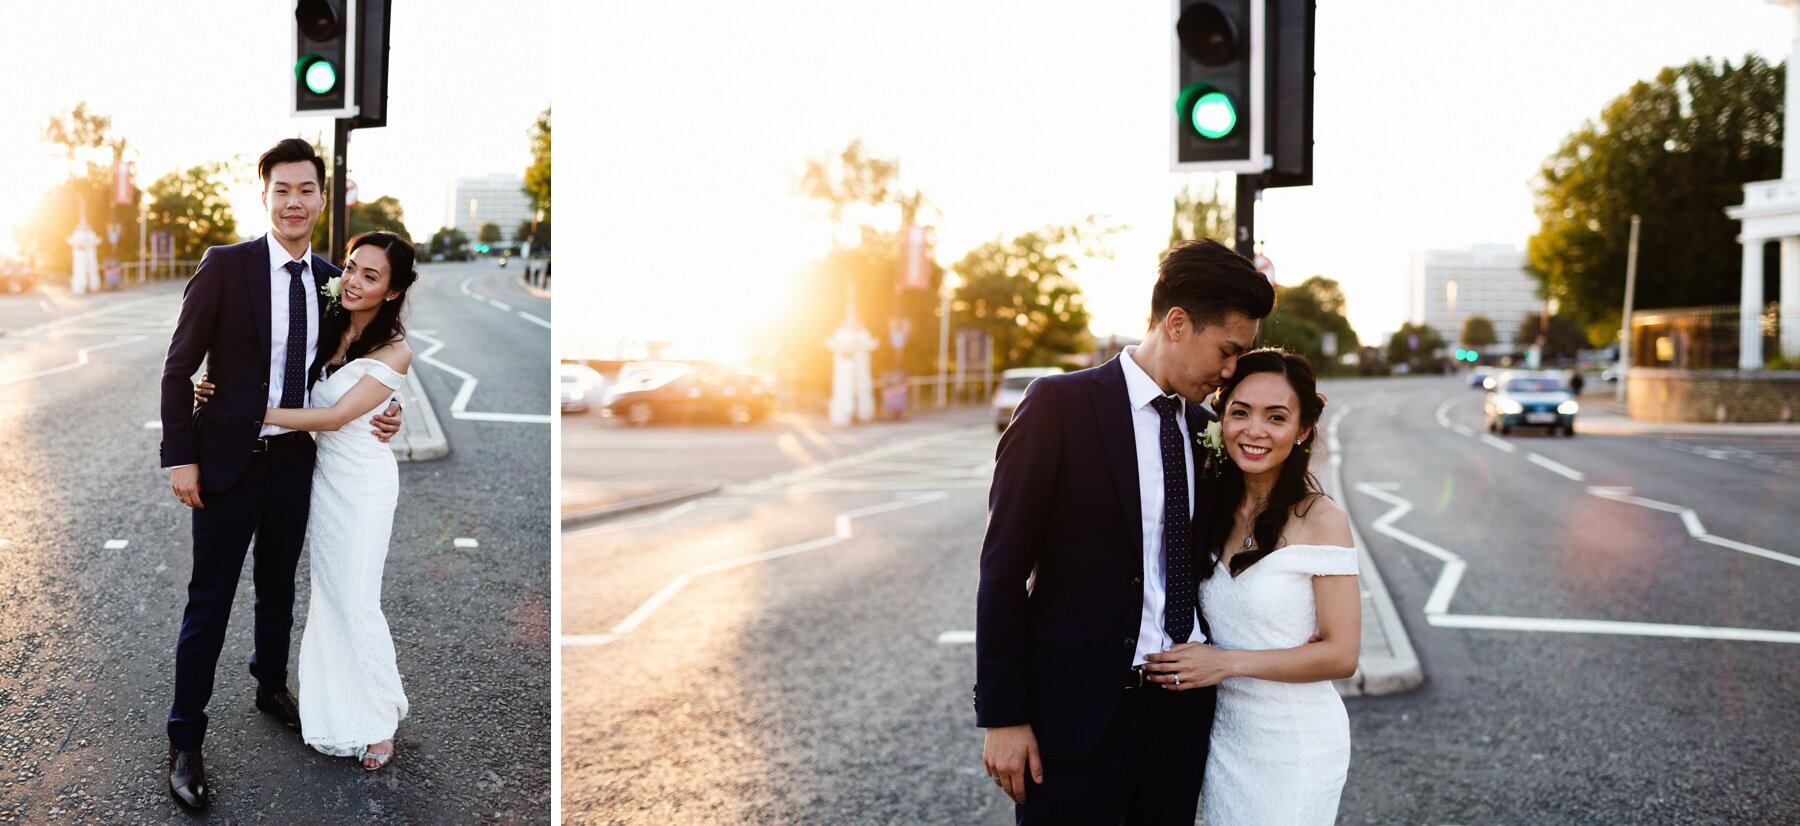 Wedding couple embrace near traffic lights on Southampton's waterfront